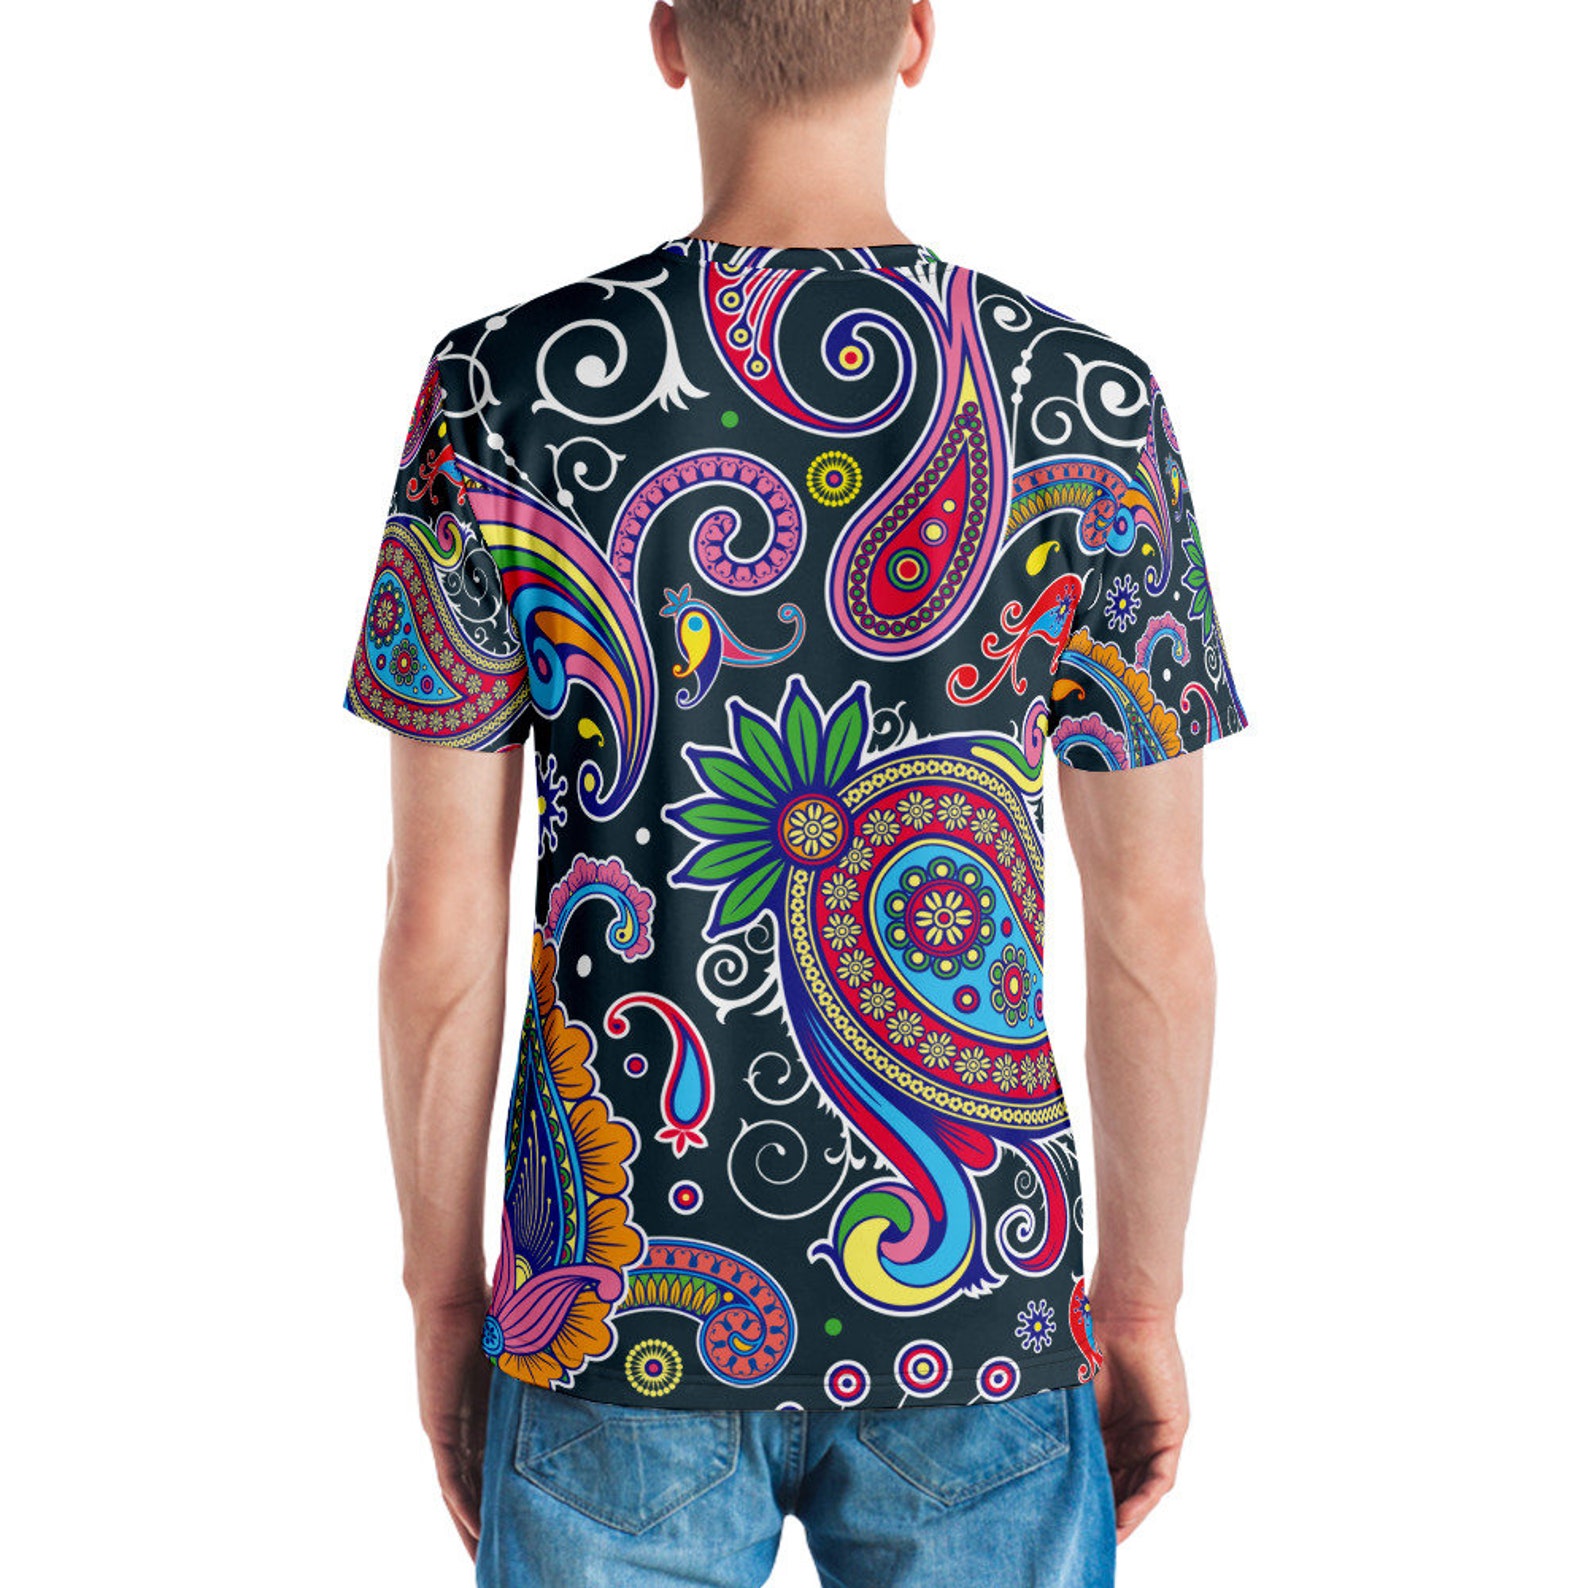 Vintage Mandala Music Festival shirt Cool Hippie shirt | Etsy